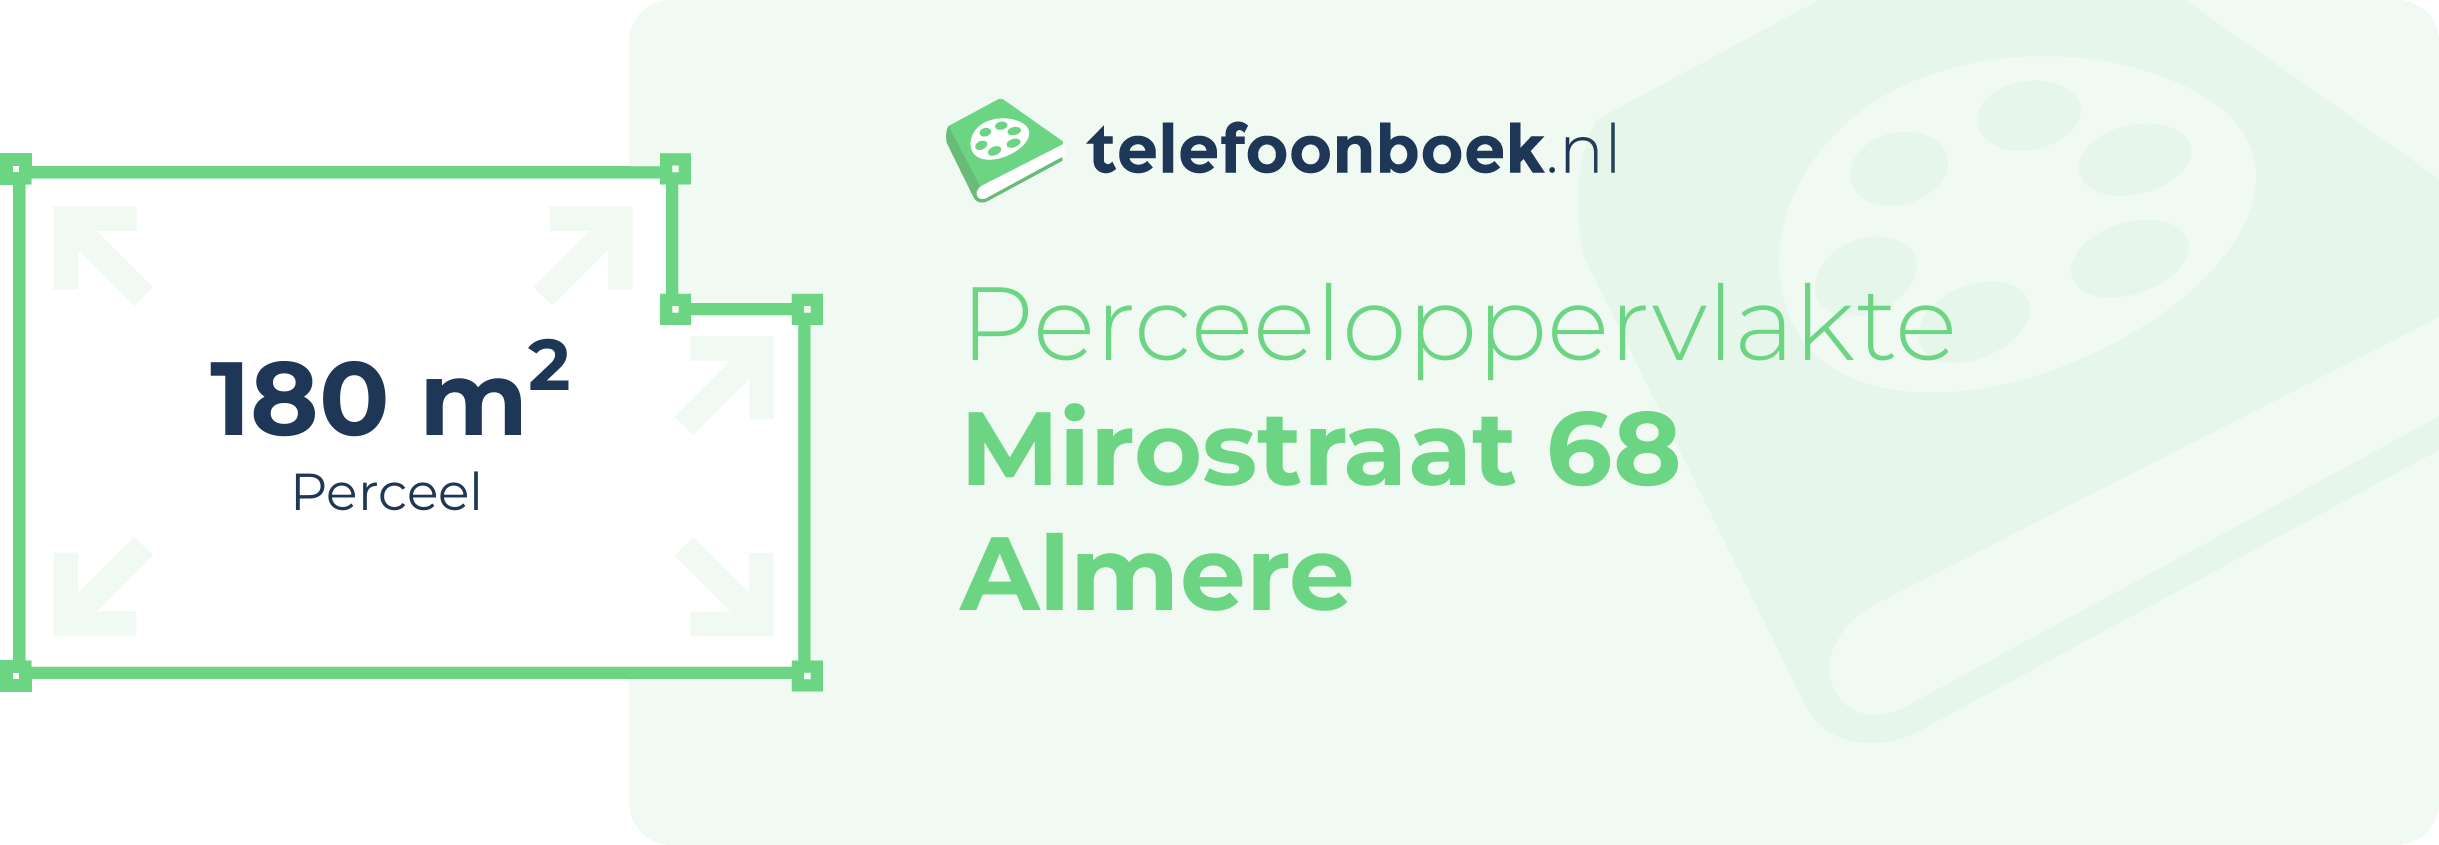 Perceeloppervlakte Mirostraat 68 Almere